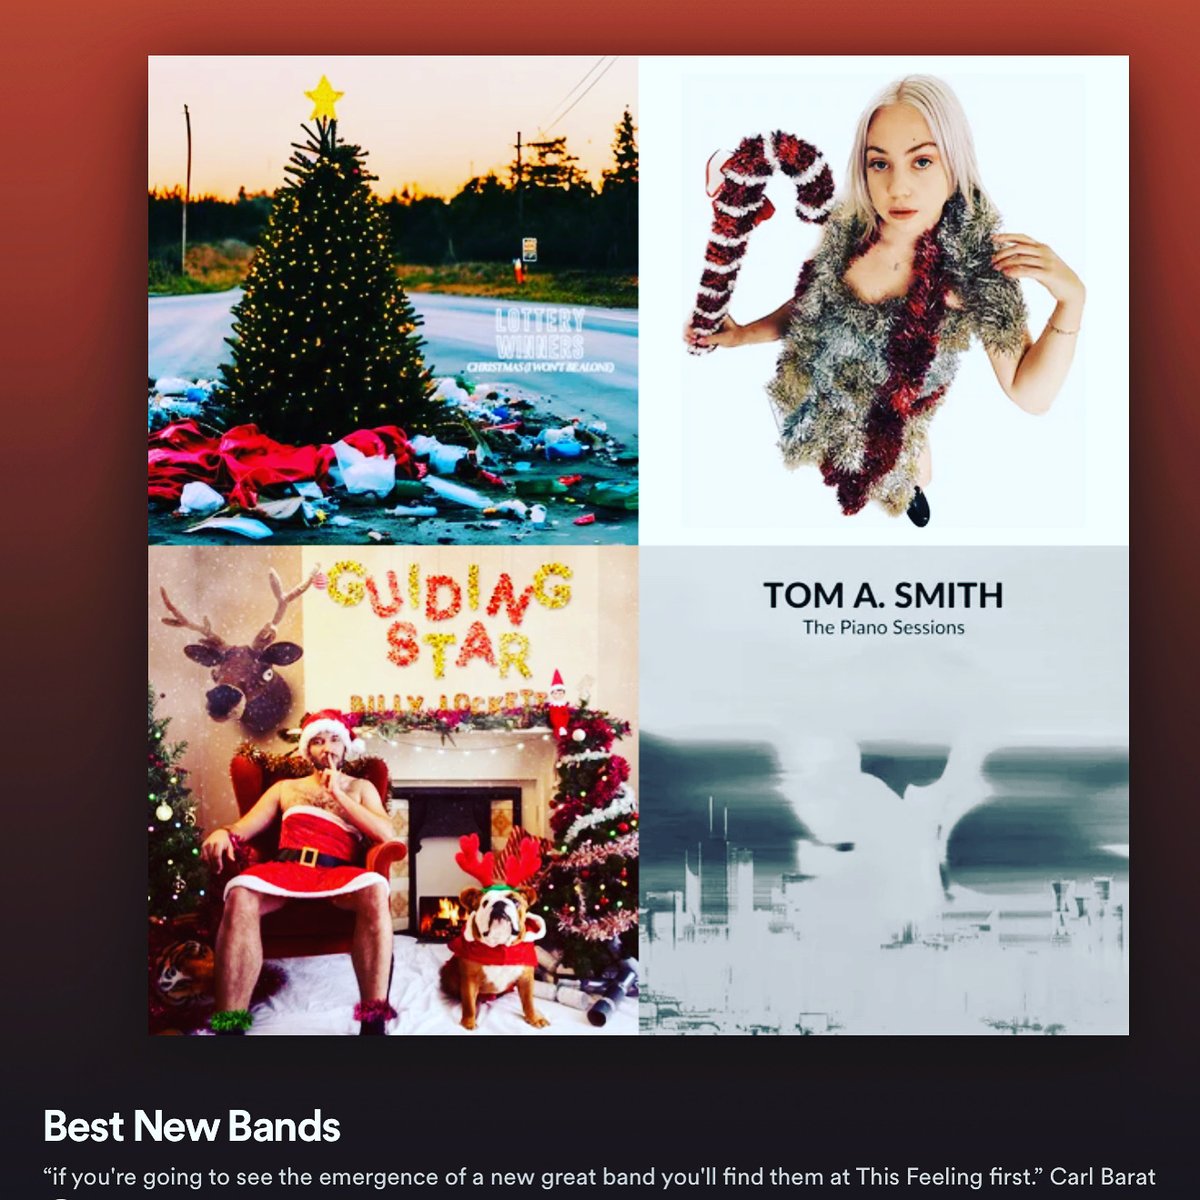 Best New Bands playlist adds week 51/2022 Merry Christmas have a cracker see you in 2023! ⛄🎄🎁 @LotteryWinners @lauranhibberd @billylockett @tomasmithmusic @voodo0s @LowLyingSun @tomrogan8 @The_Resolutions @Velvetbandgla @NTNLRAIL & more 🔥🔥 open.spotify.com/playlist/3ku8L…